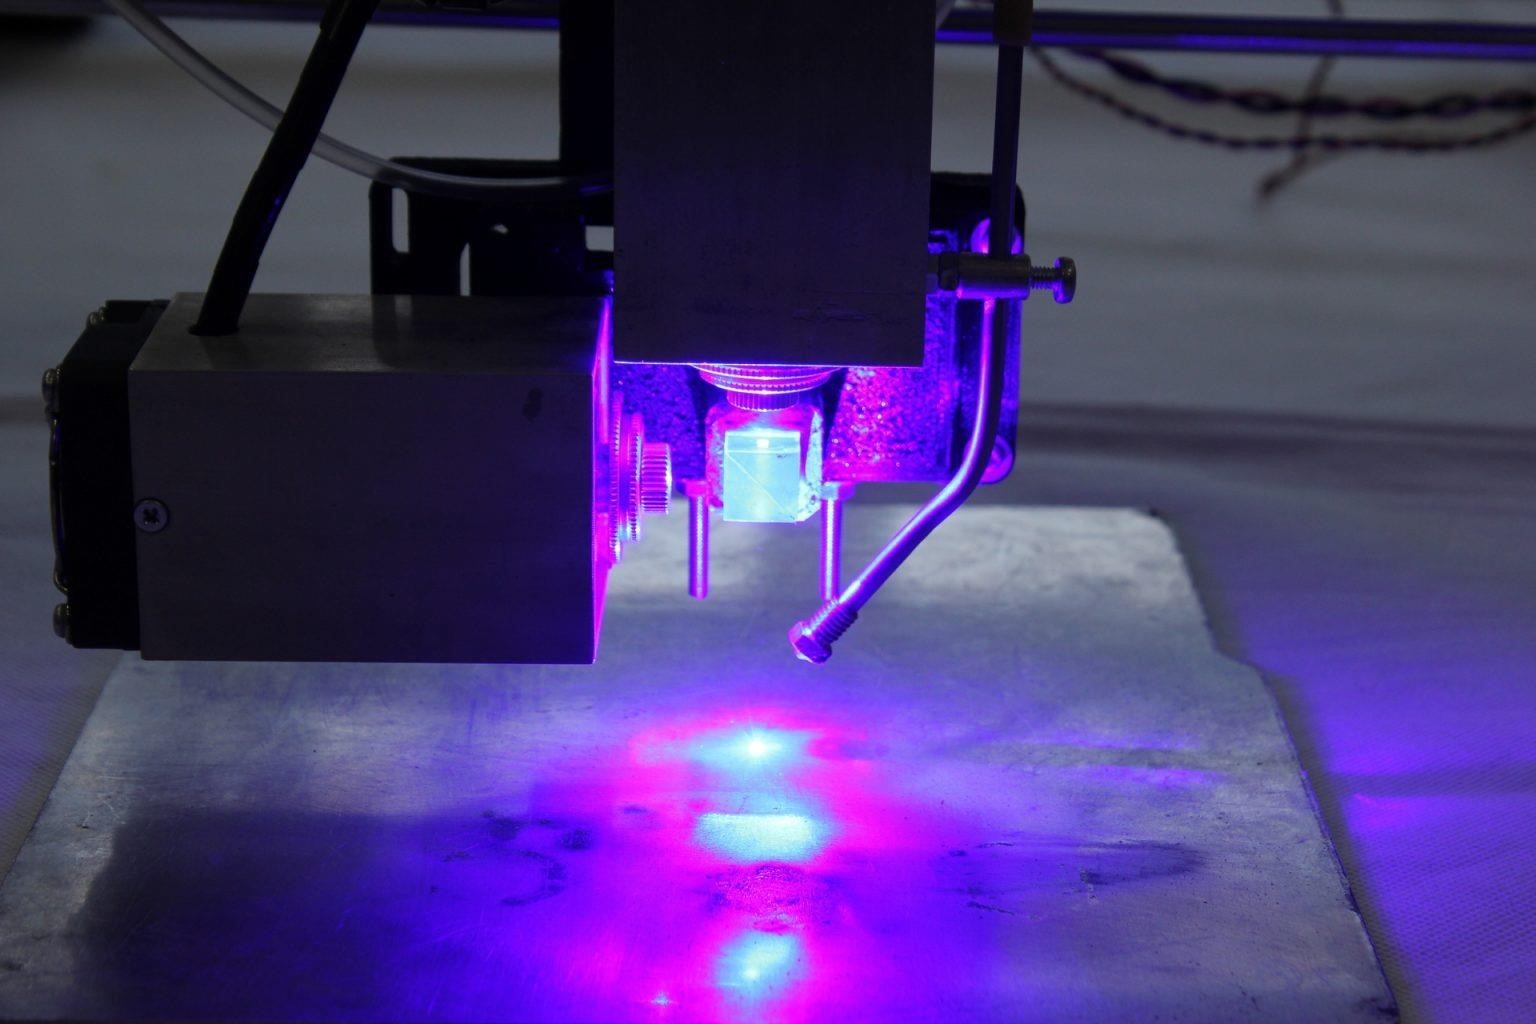 Our assembled multi-laser: